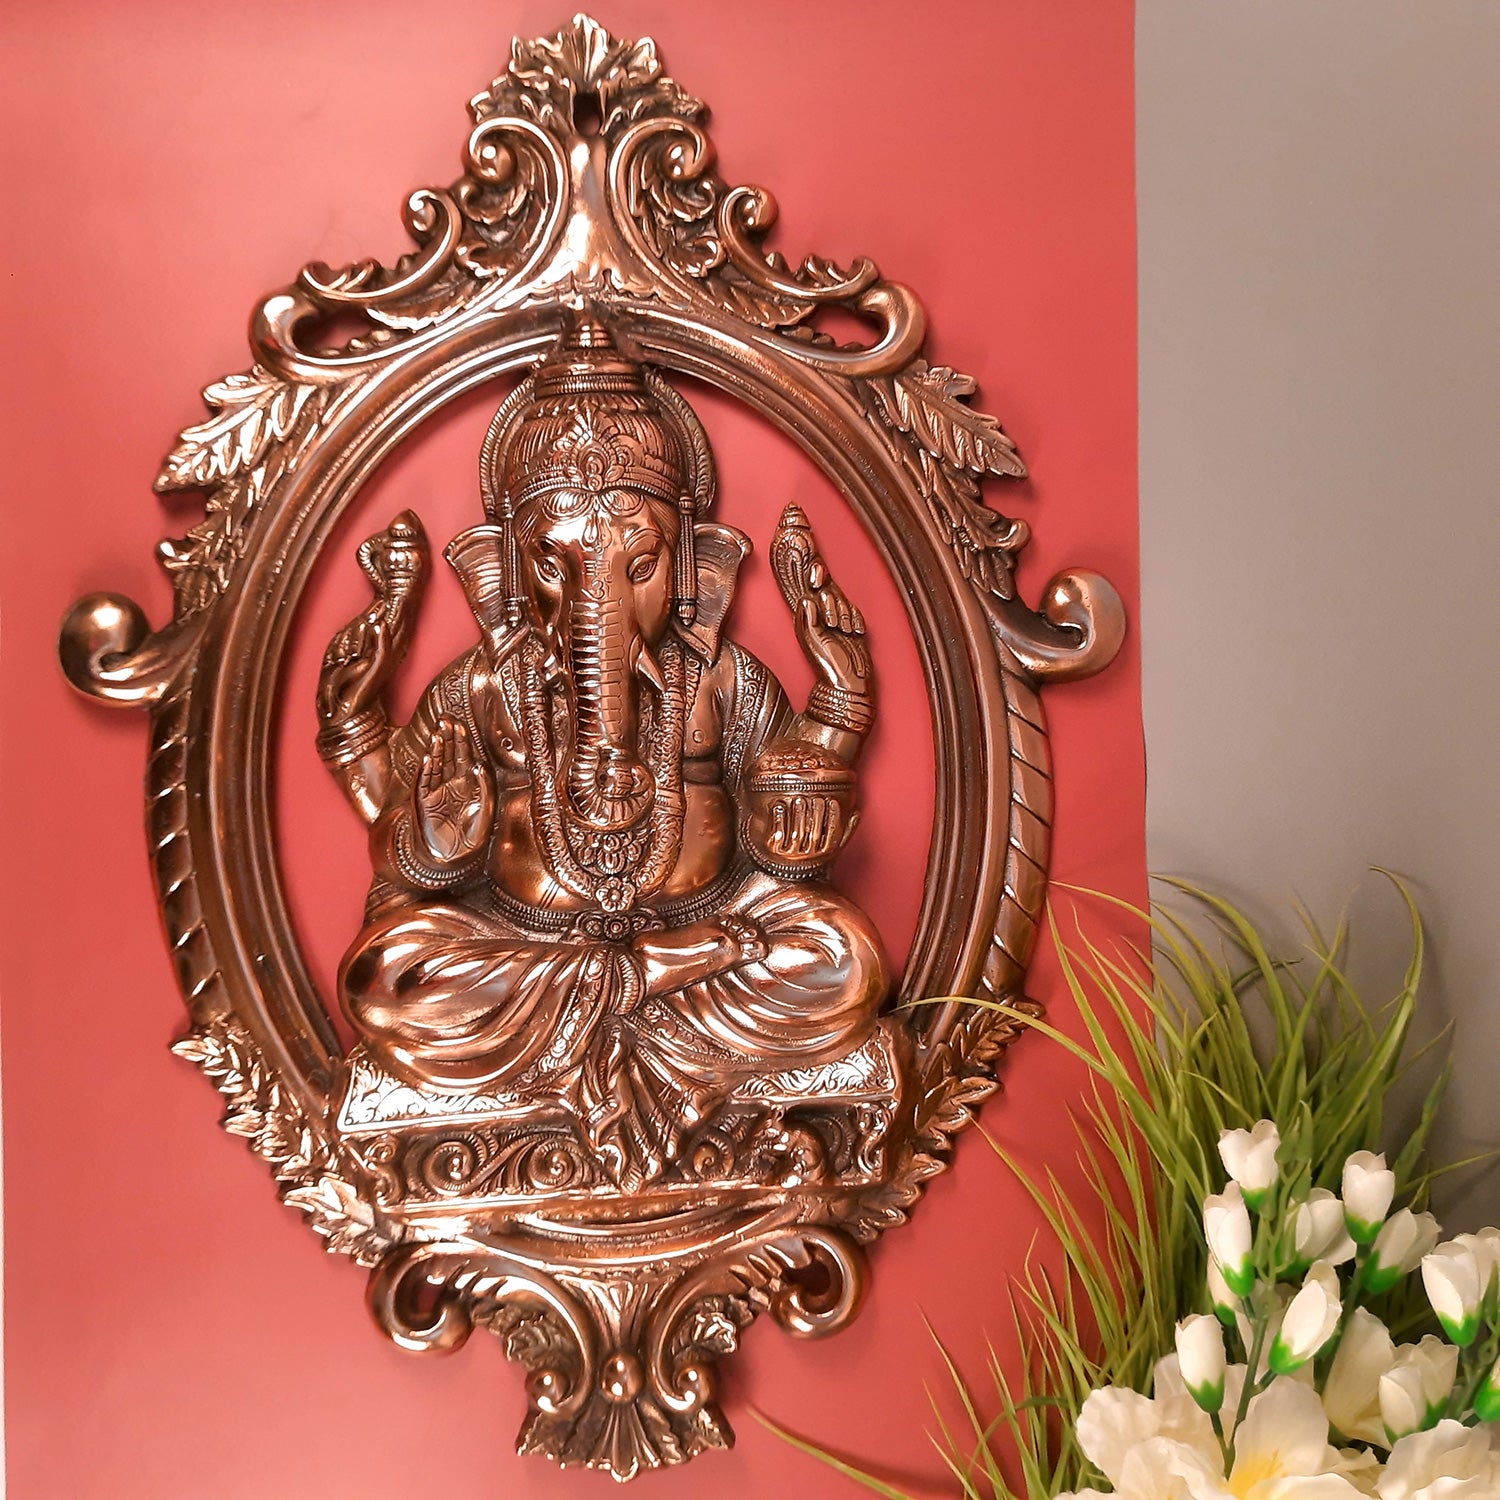 Ganesh Idol Wall Hanging | Big Lord Ganesha Wall Statue Decor | Religious & Spiritual Wall Art - For Puja, Home & Entrance Living Room & Gift - Apkamart